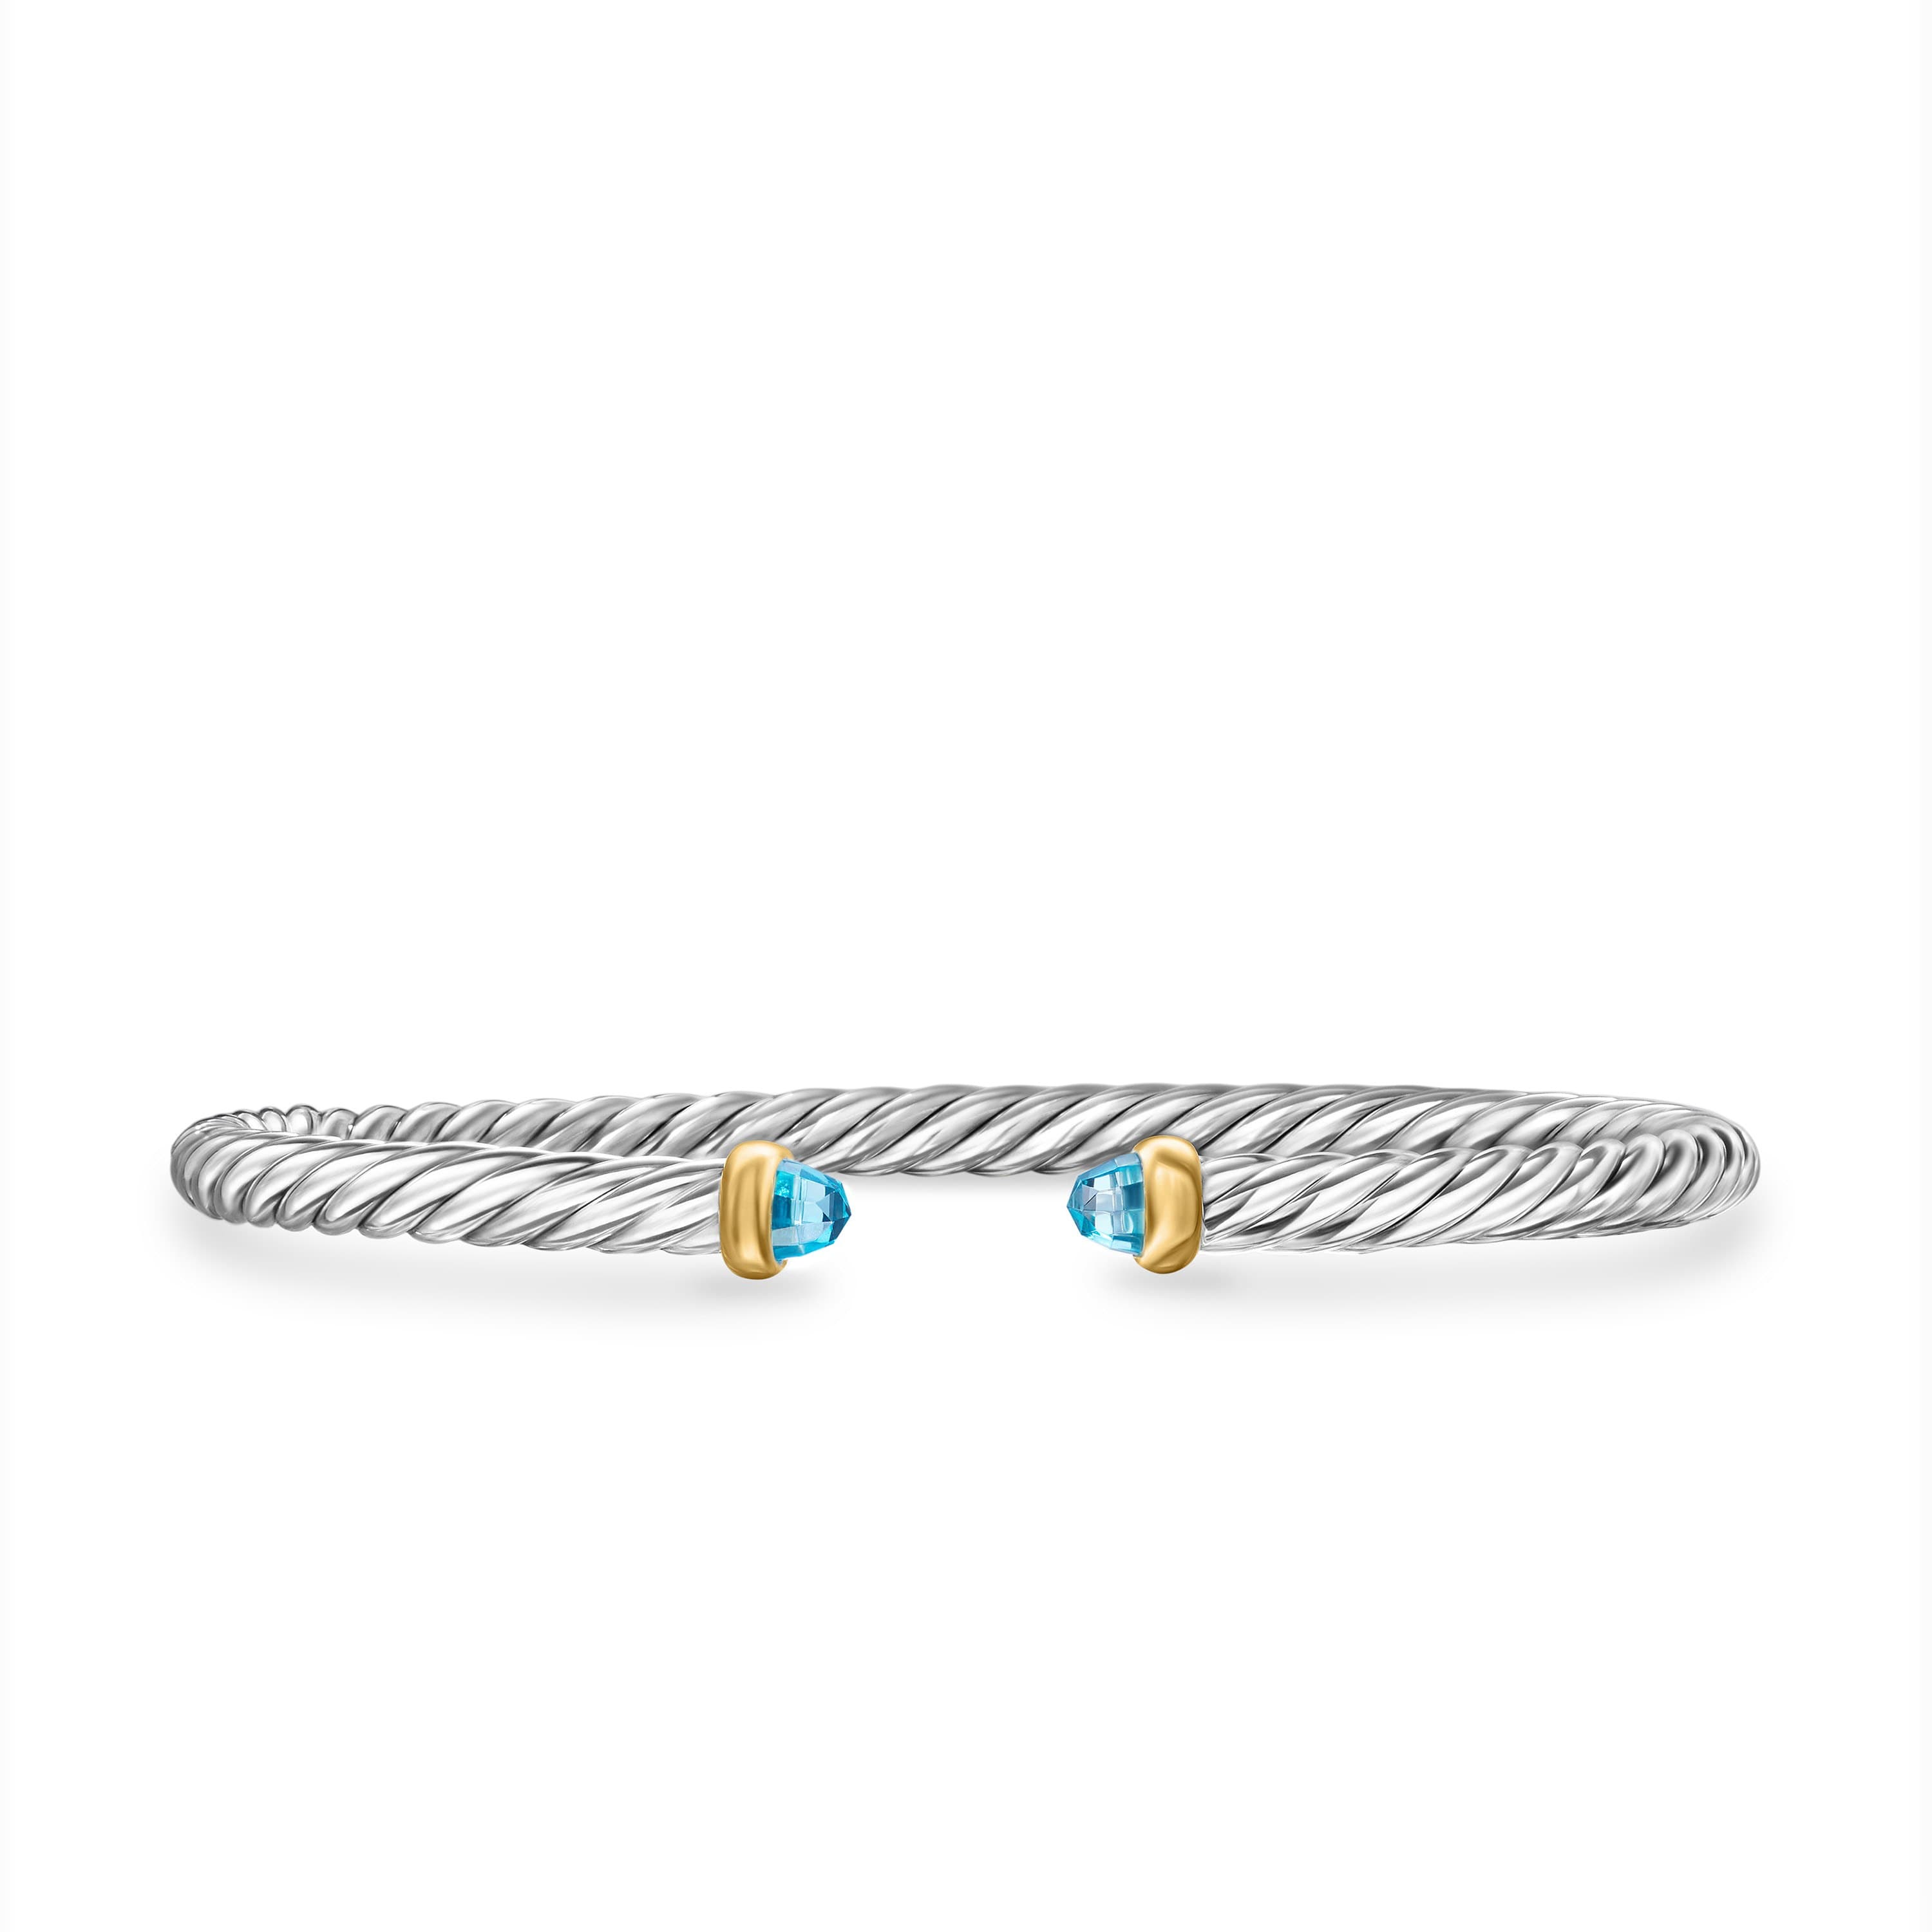 David Yurman Cable Flex Sterling Silver Bracelet with Blue Topaz, Size Medium